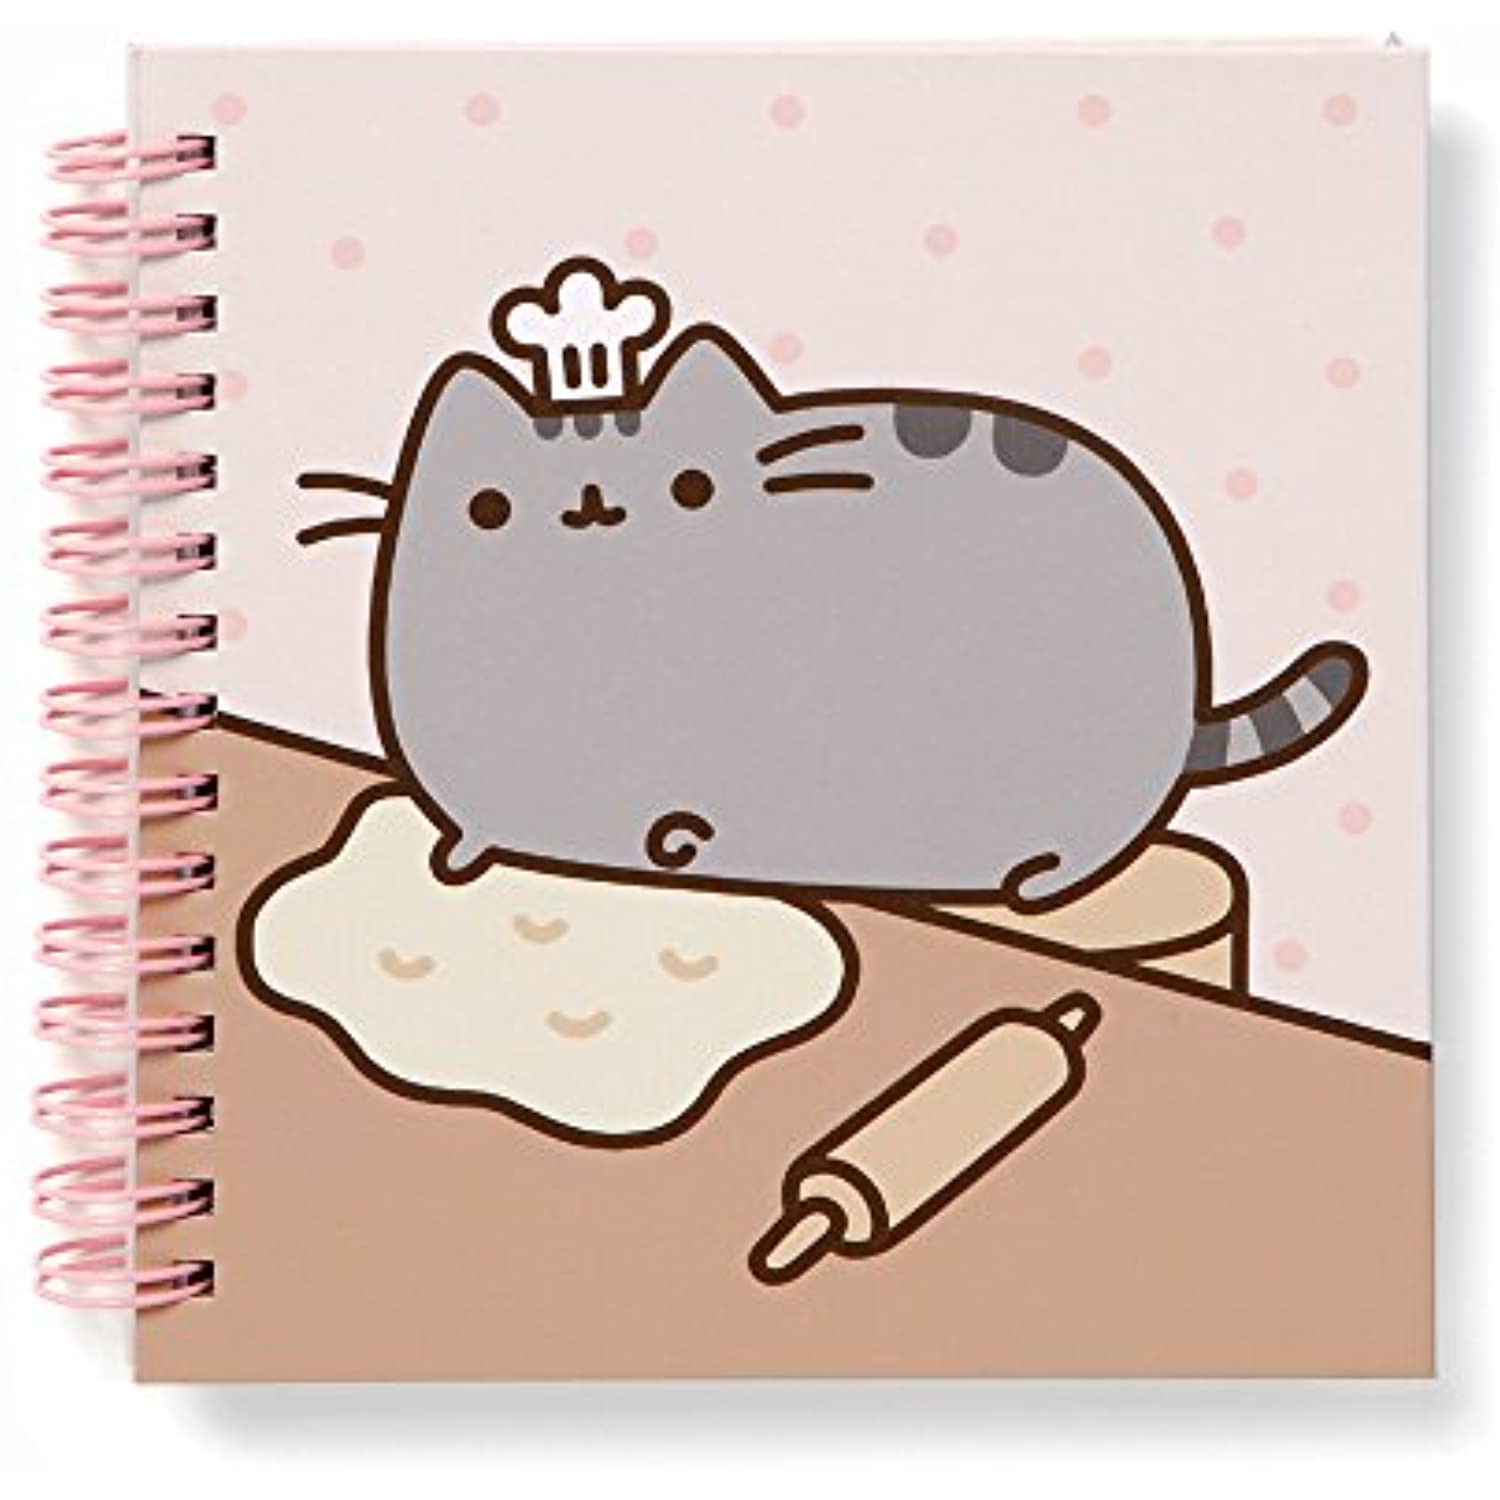 Pusheen GUND Notebook, Pencil Topper, Accessory Case and Food Sticker Bundle